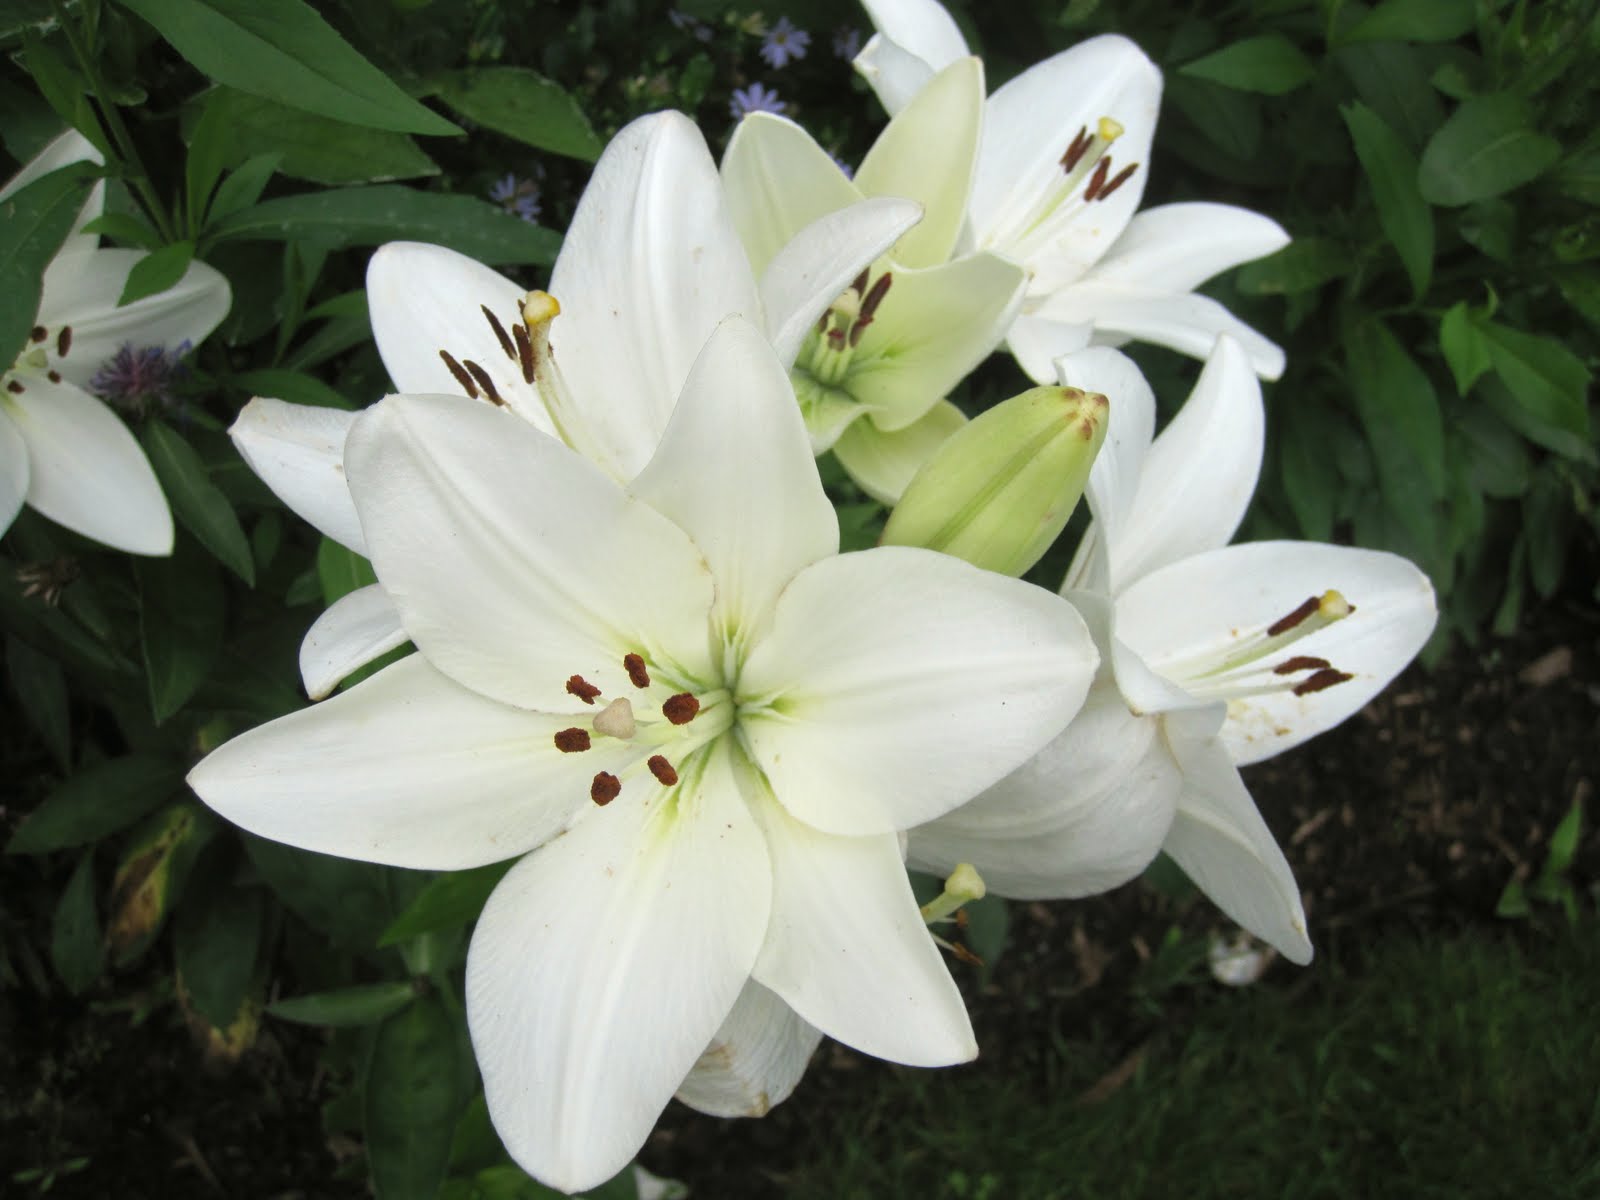 White lily photos found on the web.